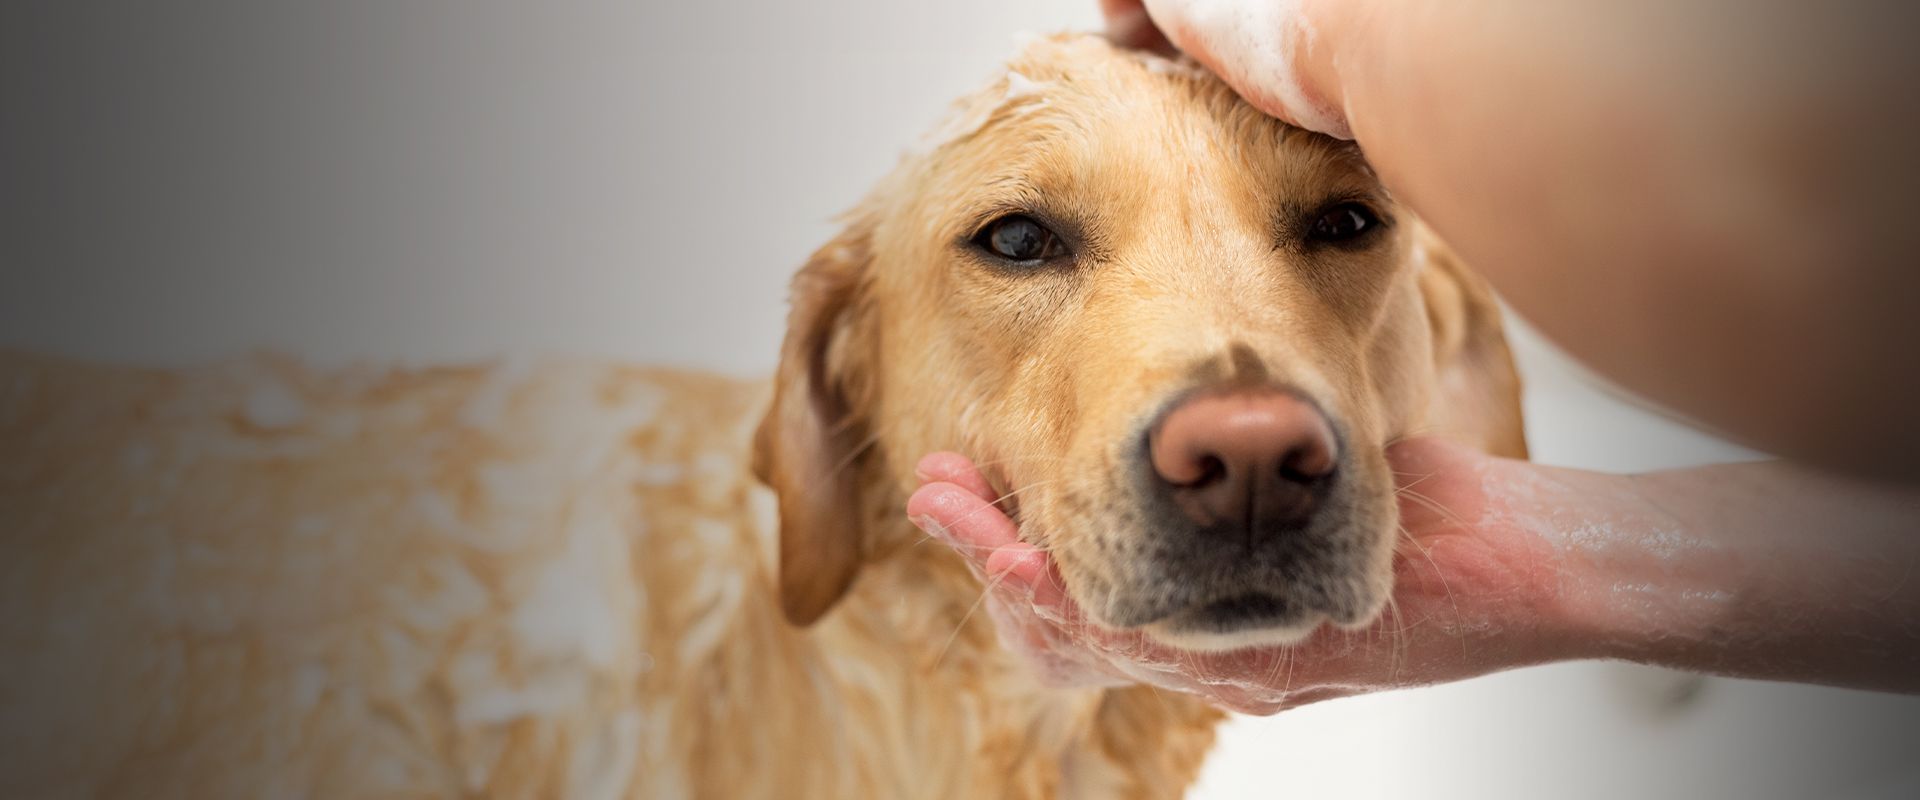 golden retriever dog taking a bath